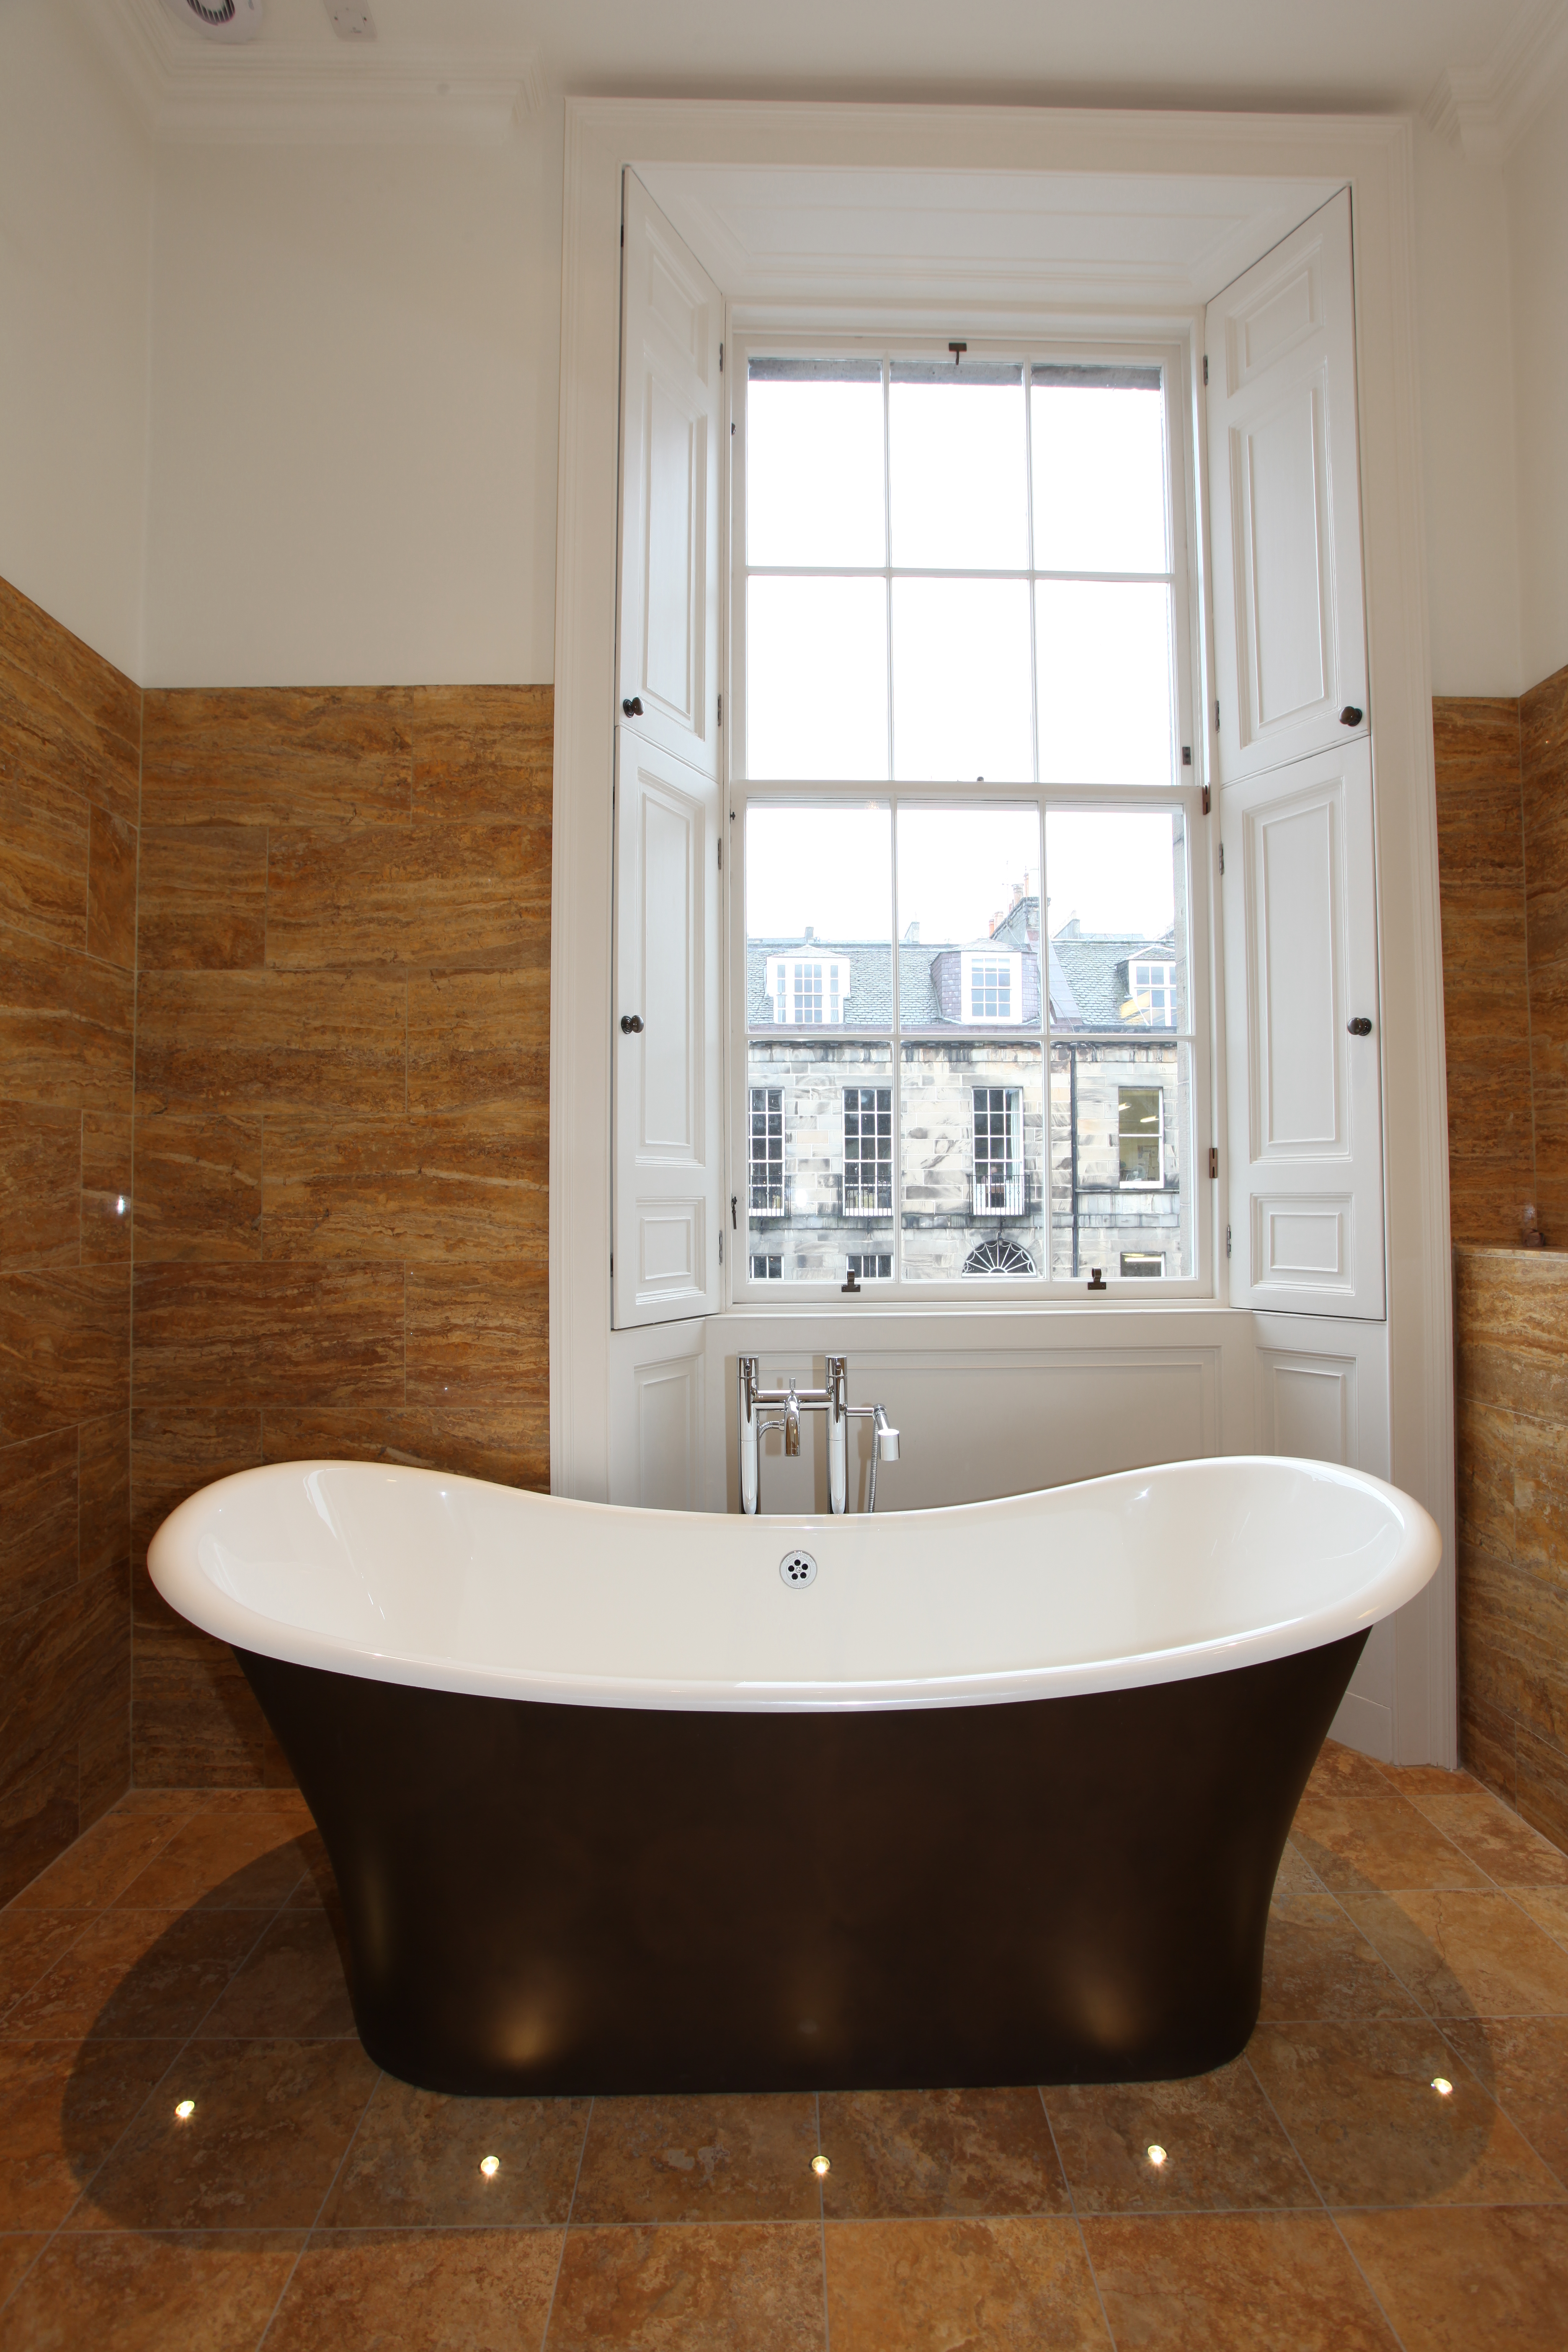 Edinburgh Freestanding Rolltop bath with floor standing tap in traditional room